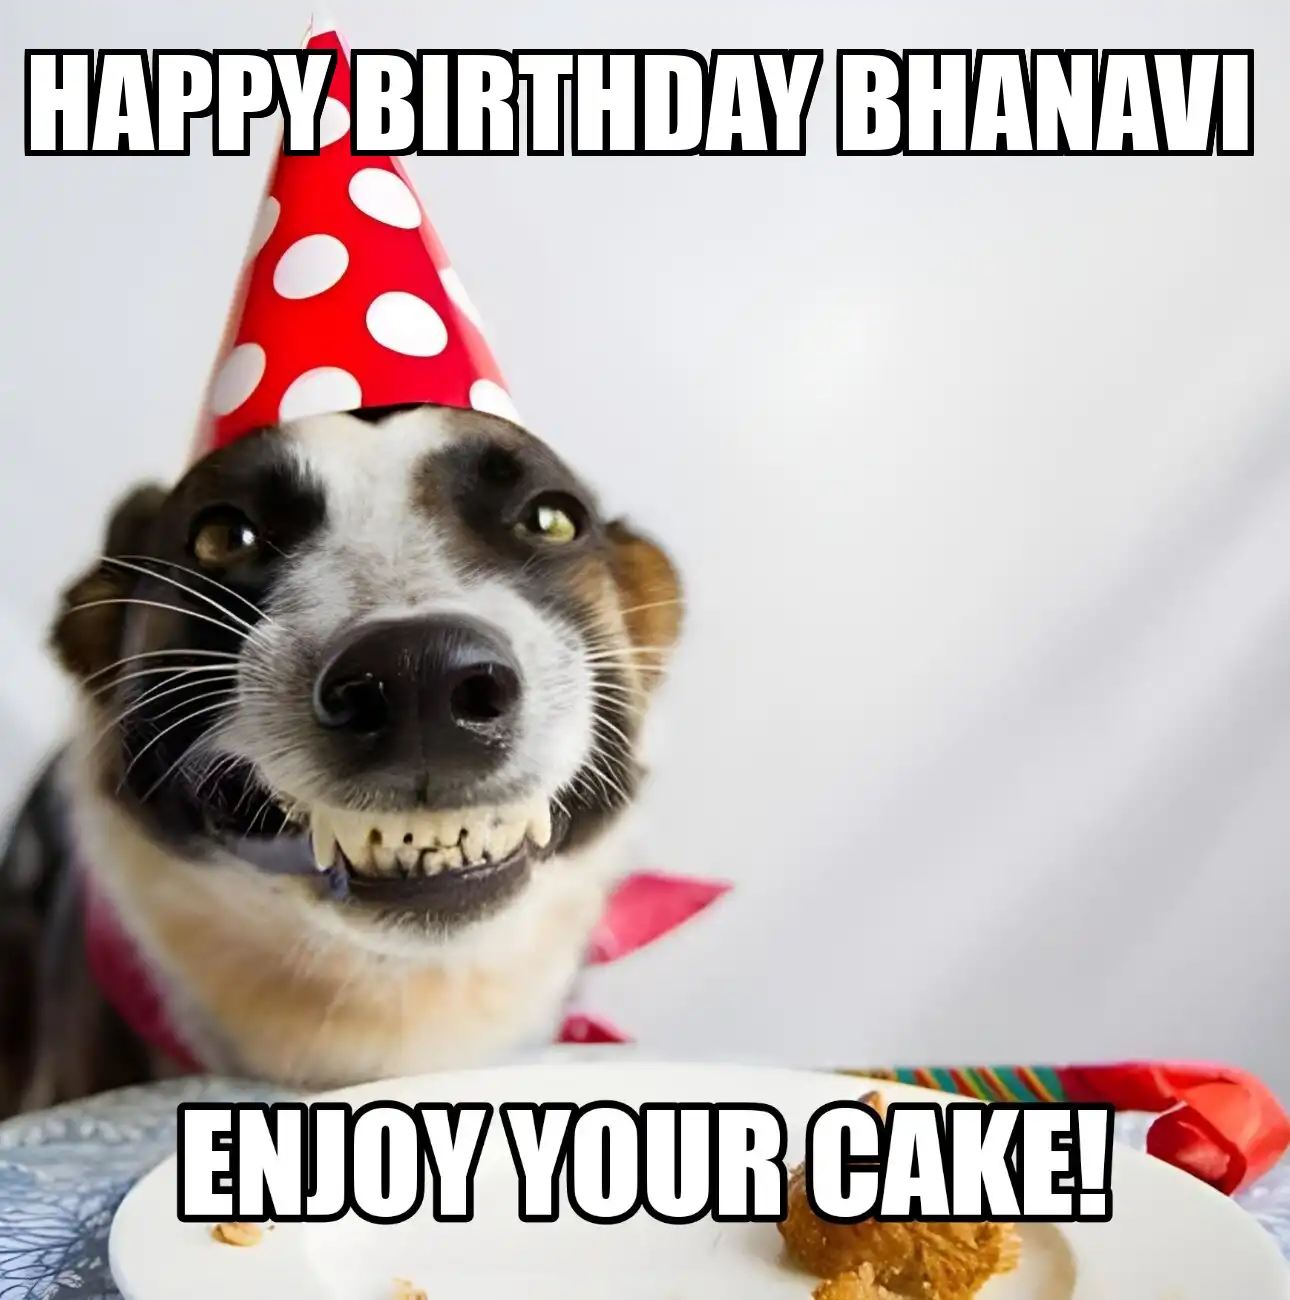 Happy Birthday Bhanavi Enjoy Your Cake Dog Meme